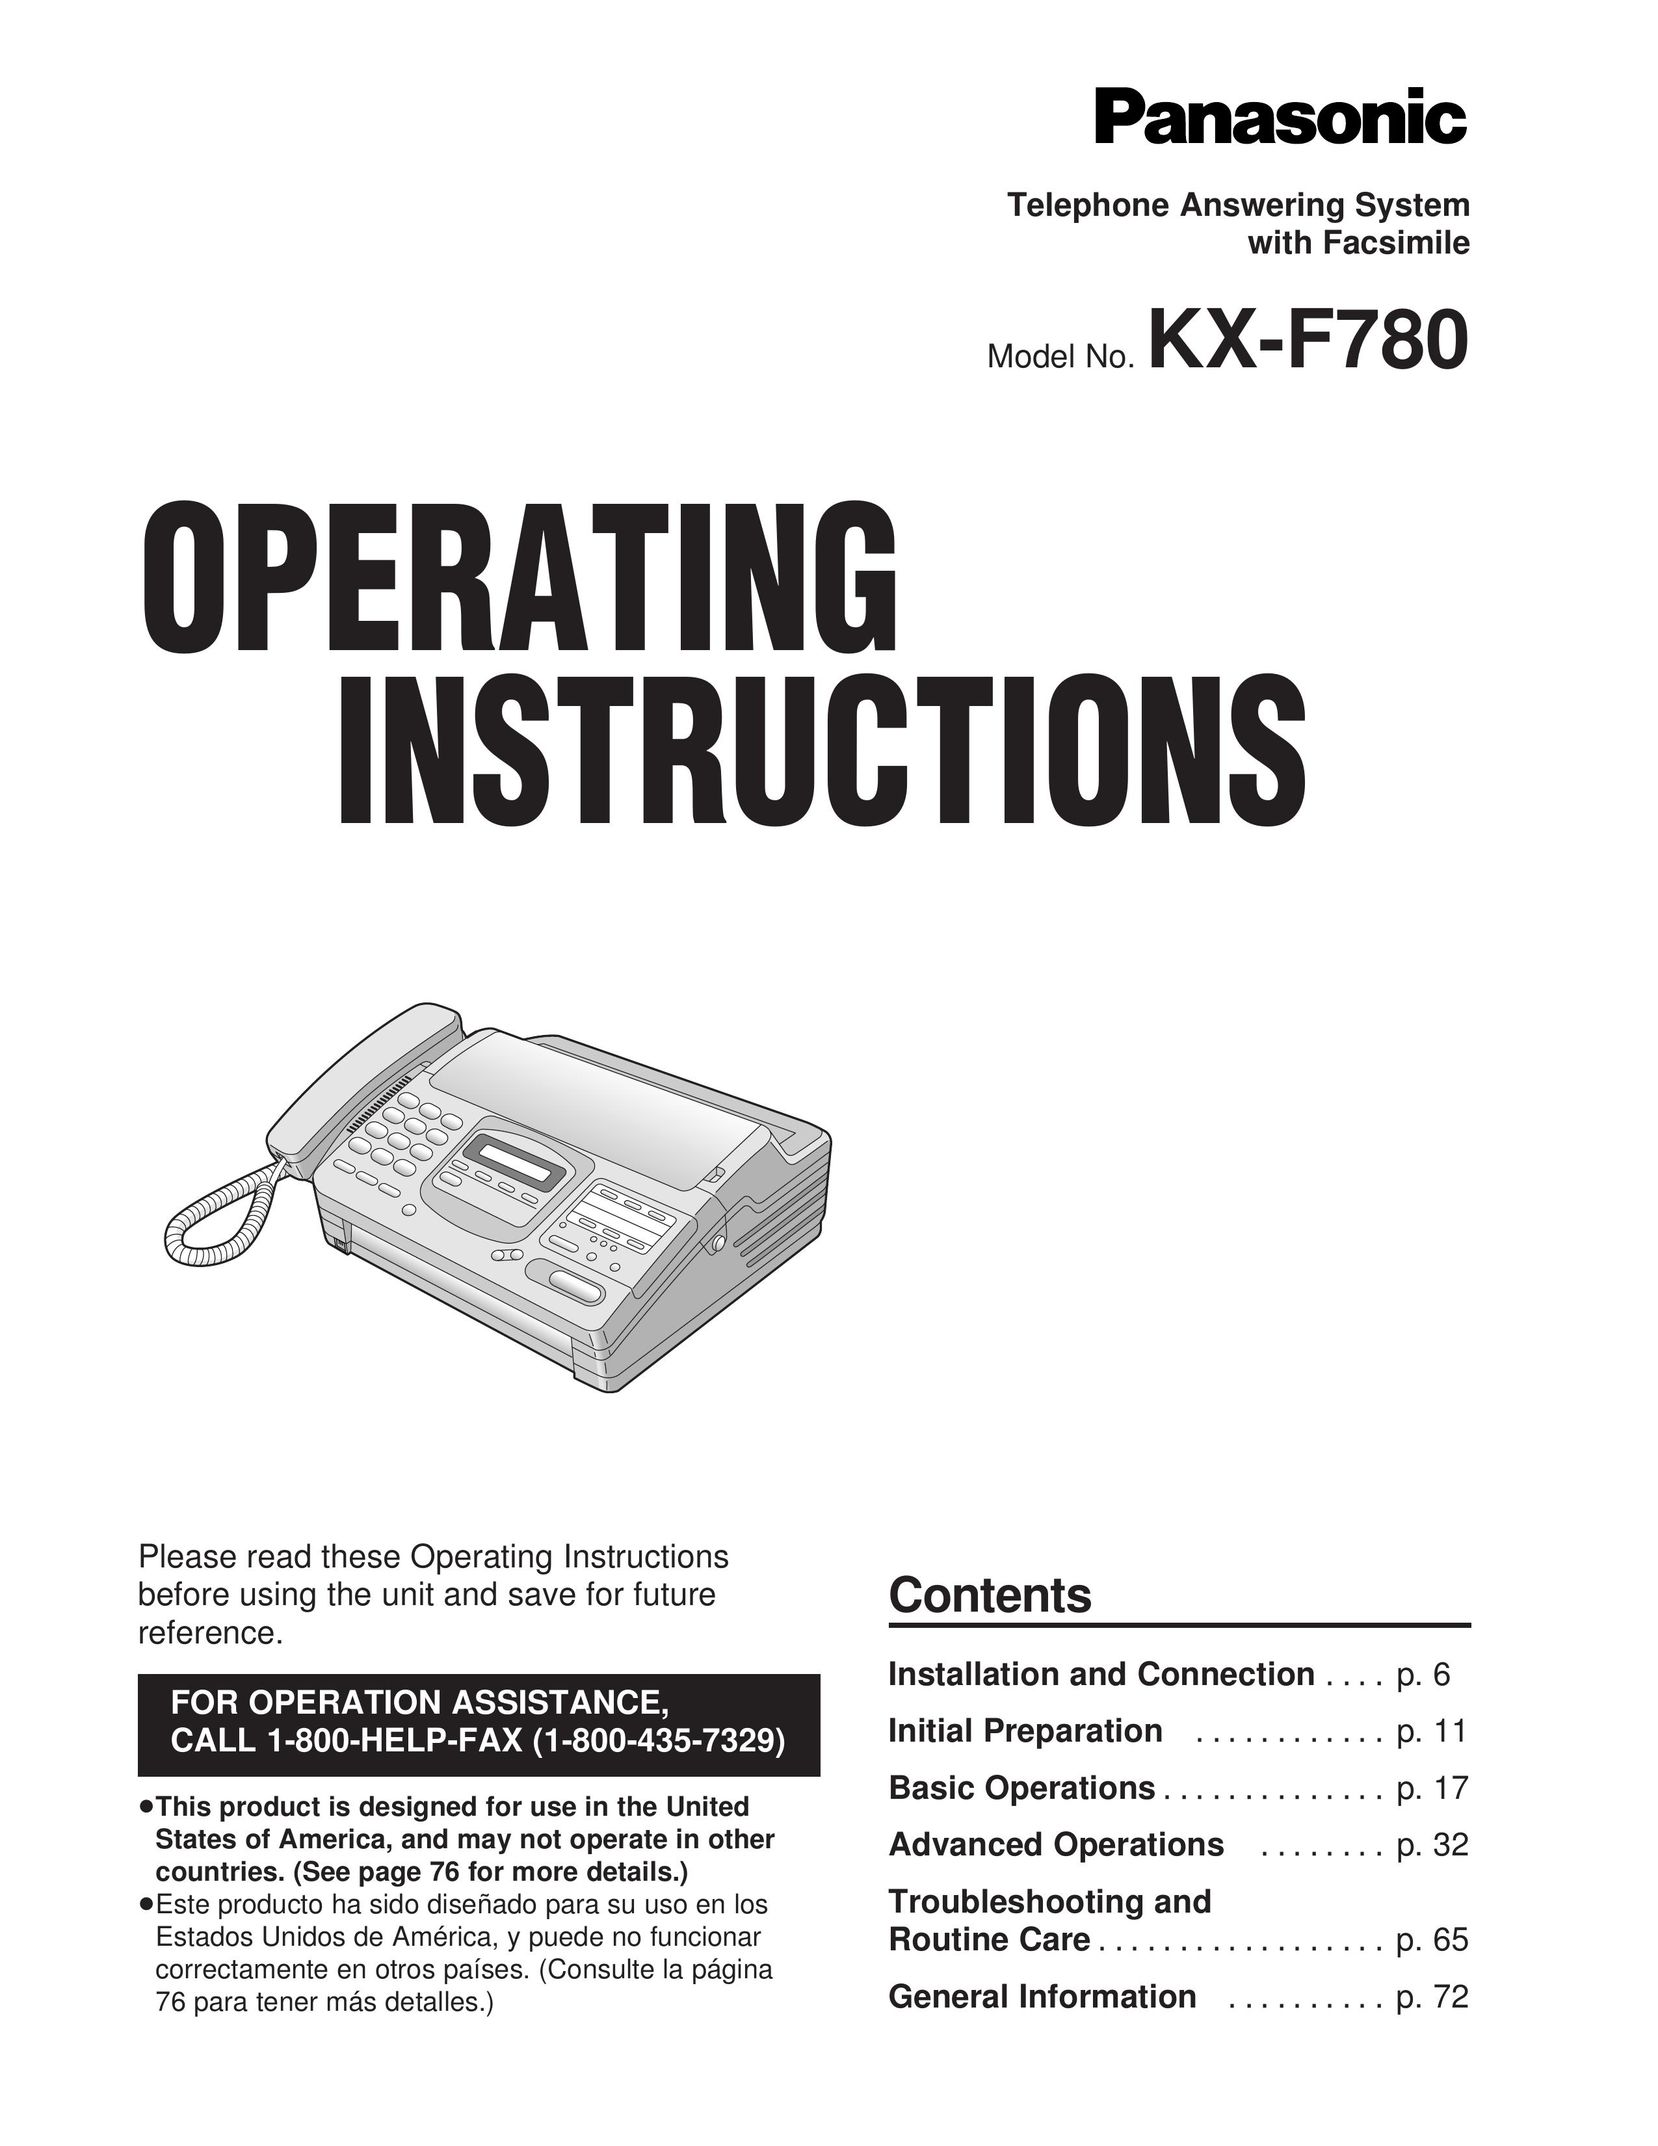 Panasonic KX-F780 Fax Machine User Manual